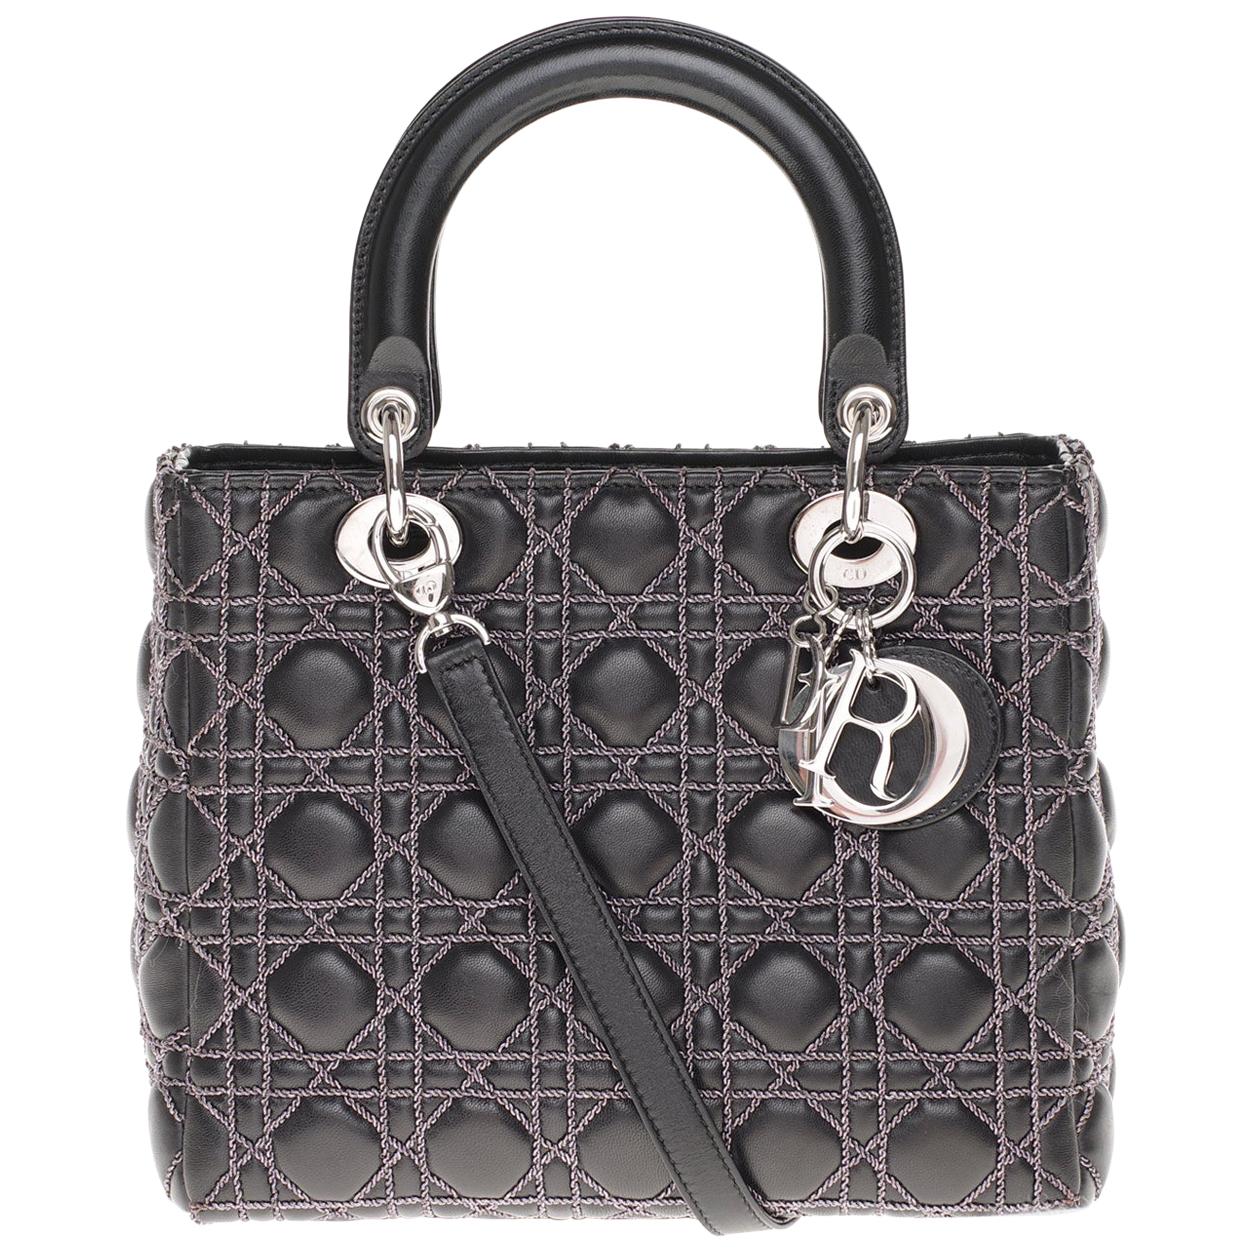  Limited Edition-Christian Dior Lady Dior MM handbag in black cannage leather